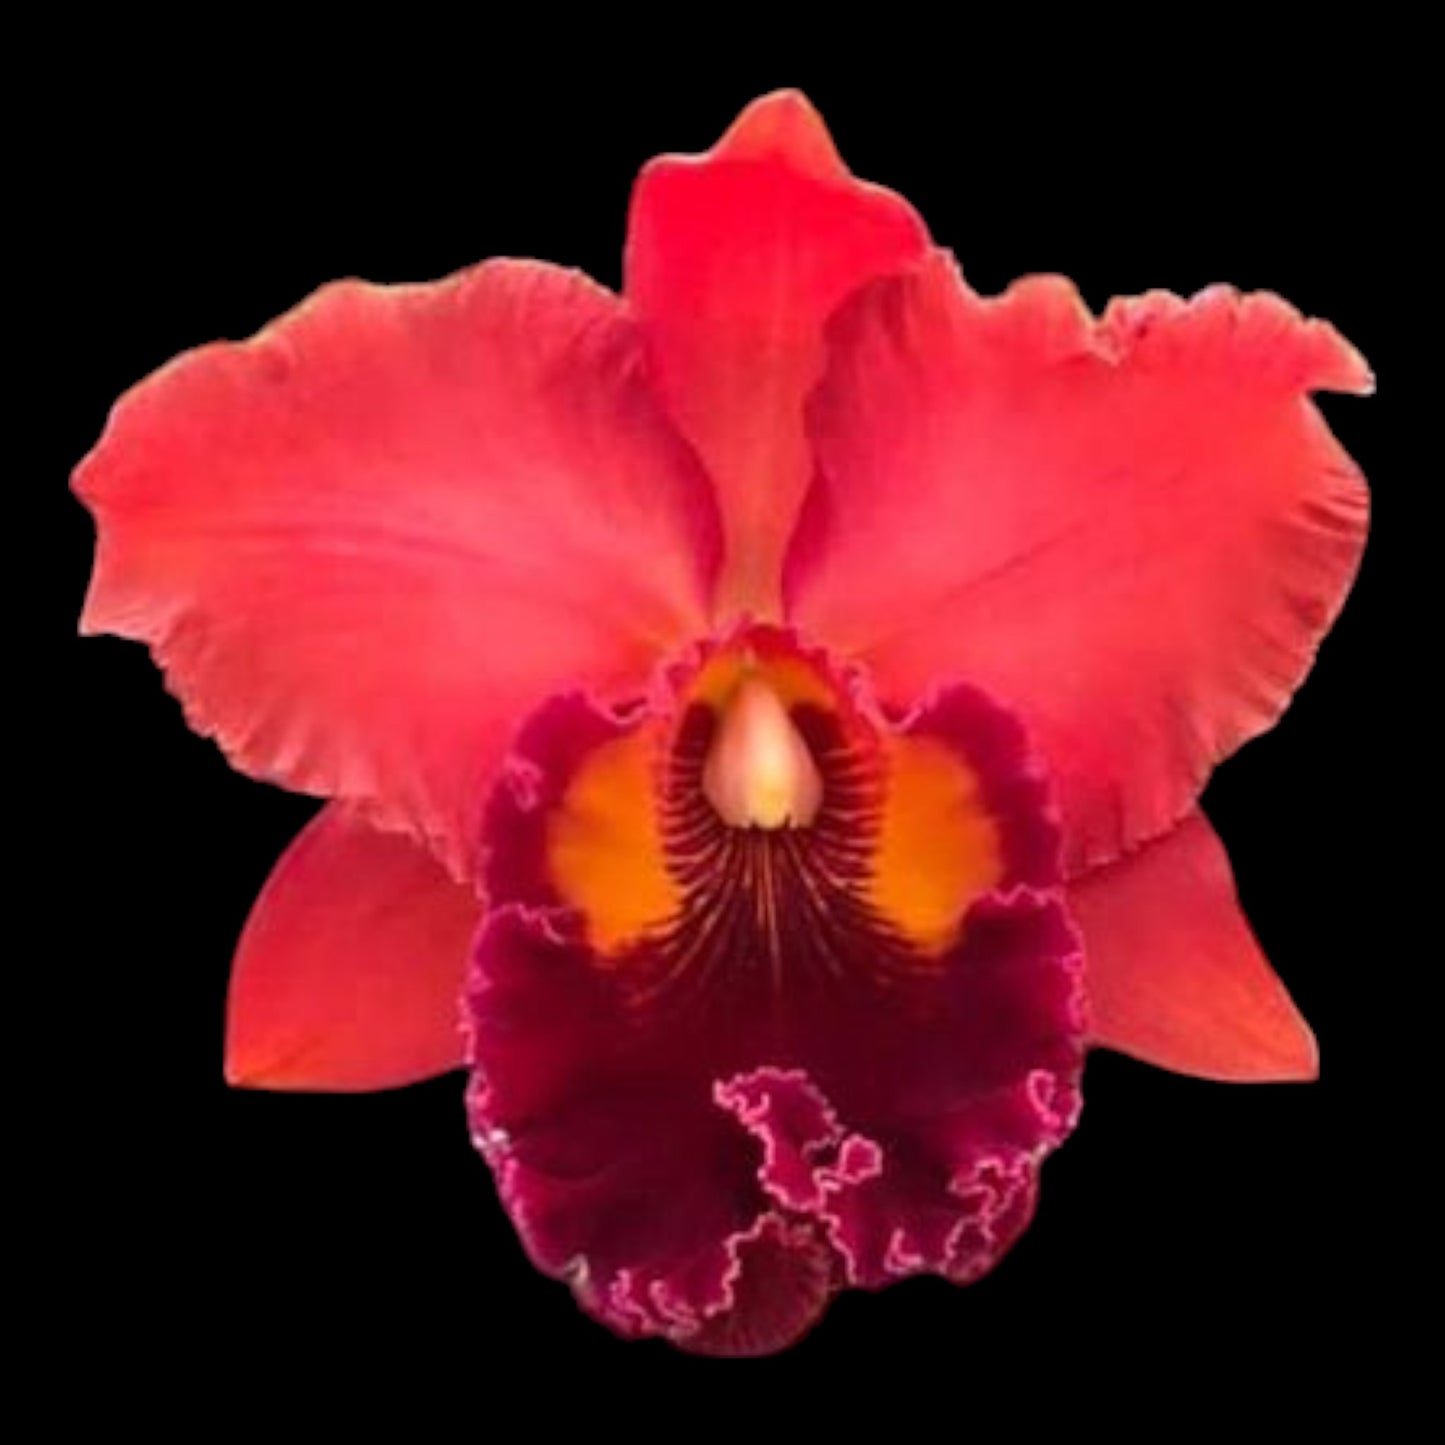 Rlc. Nakornchaisri Red 'Red Papaya' - Dr. Bill's Orchids, LLC